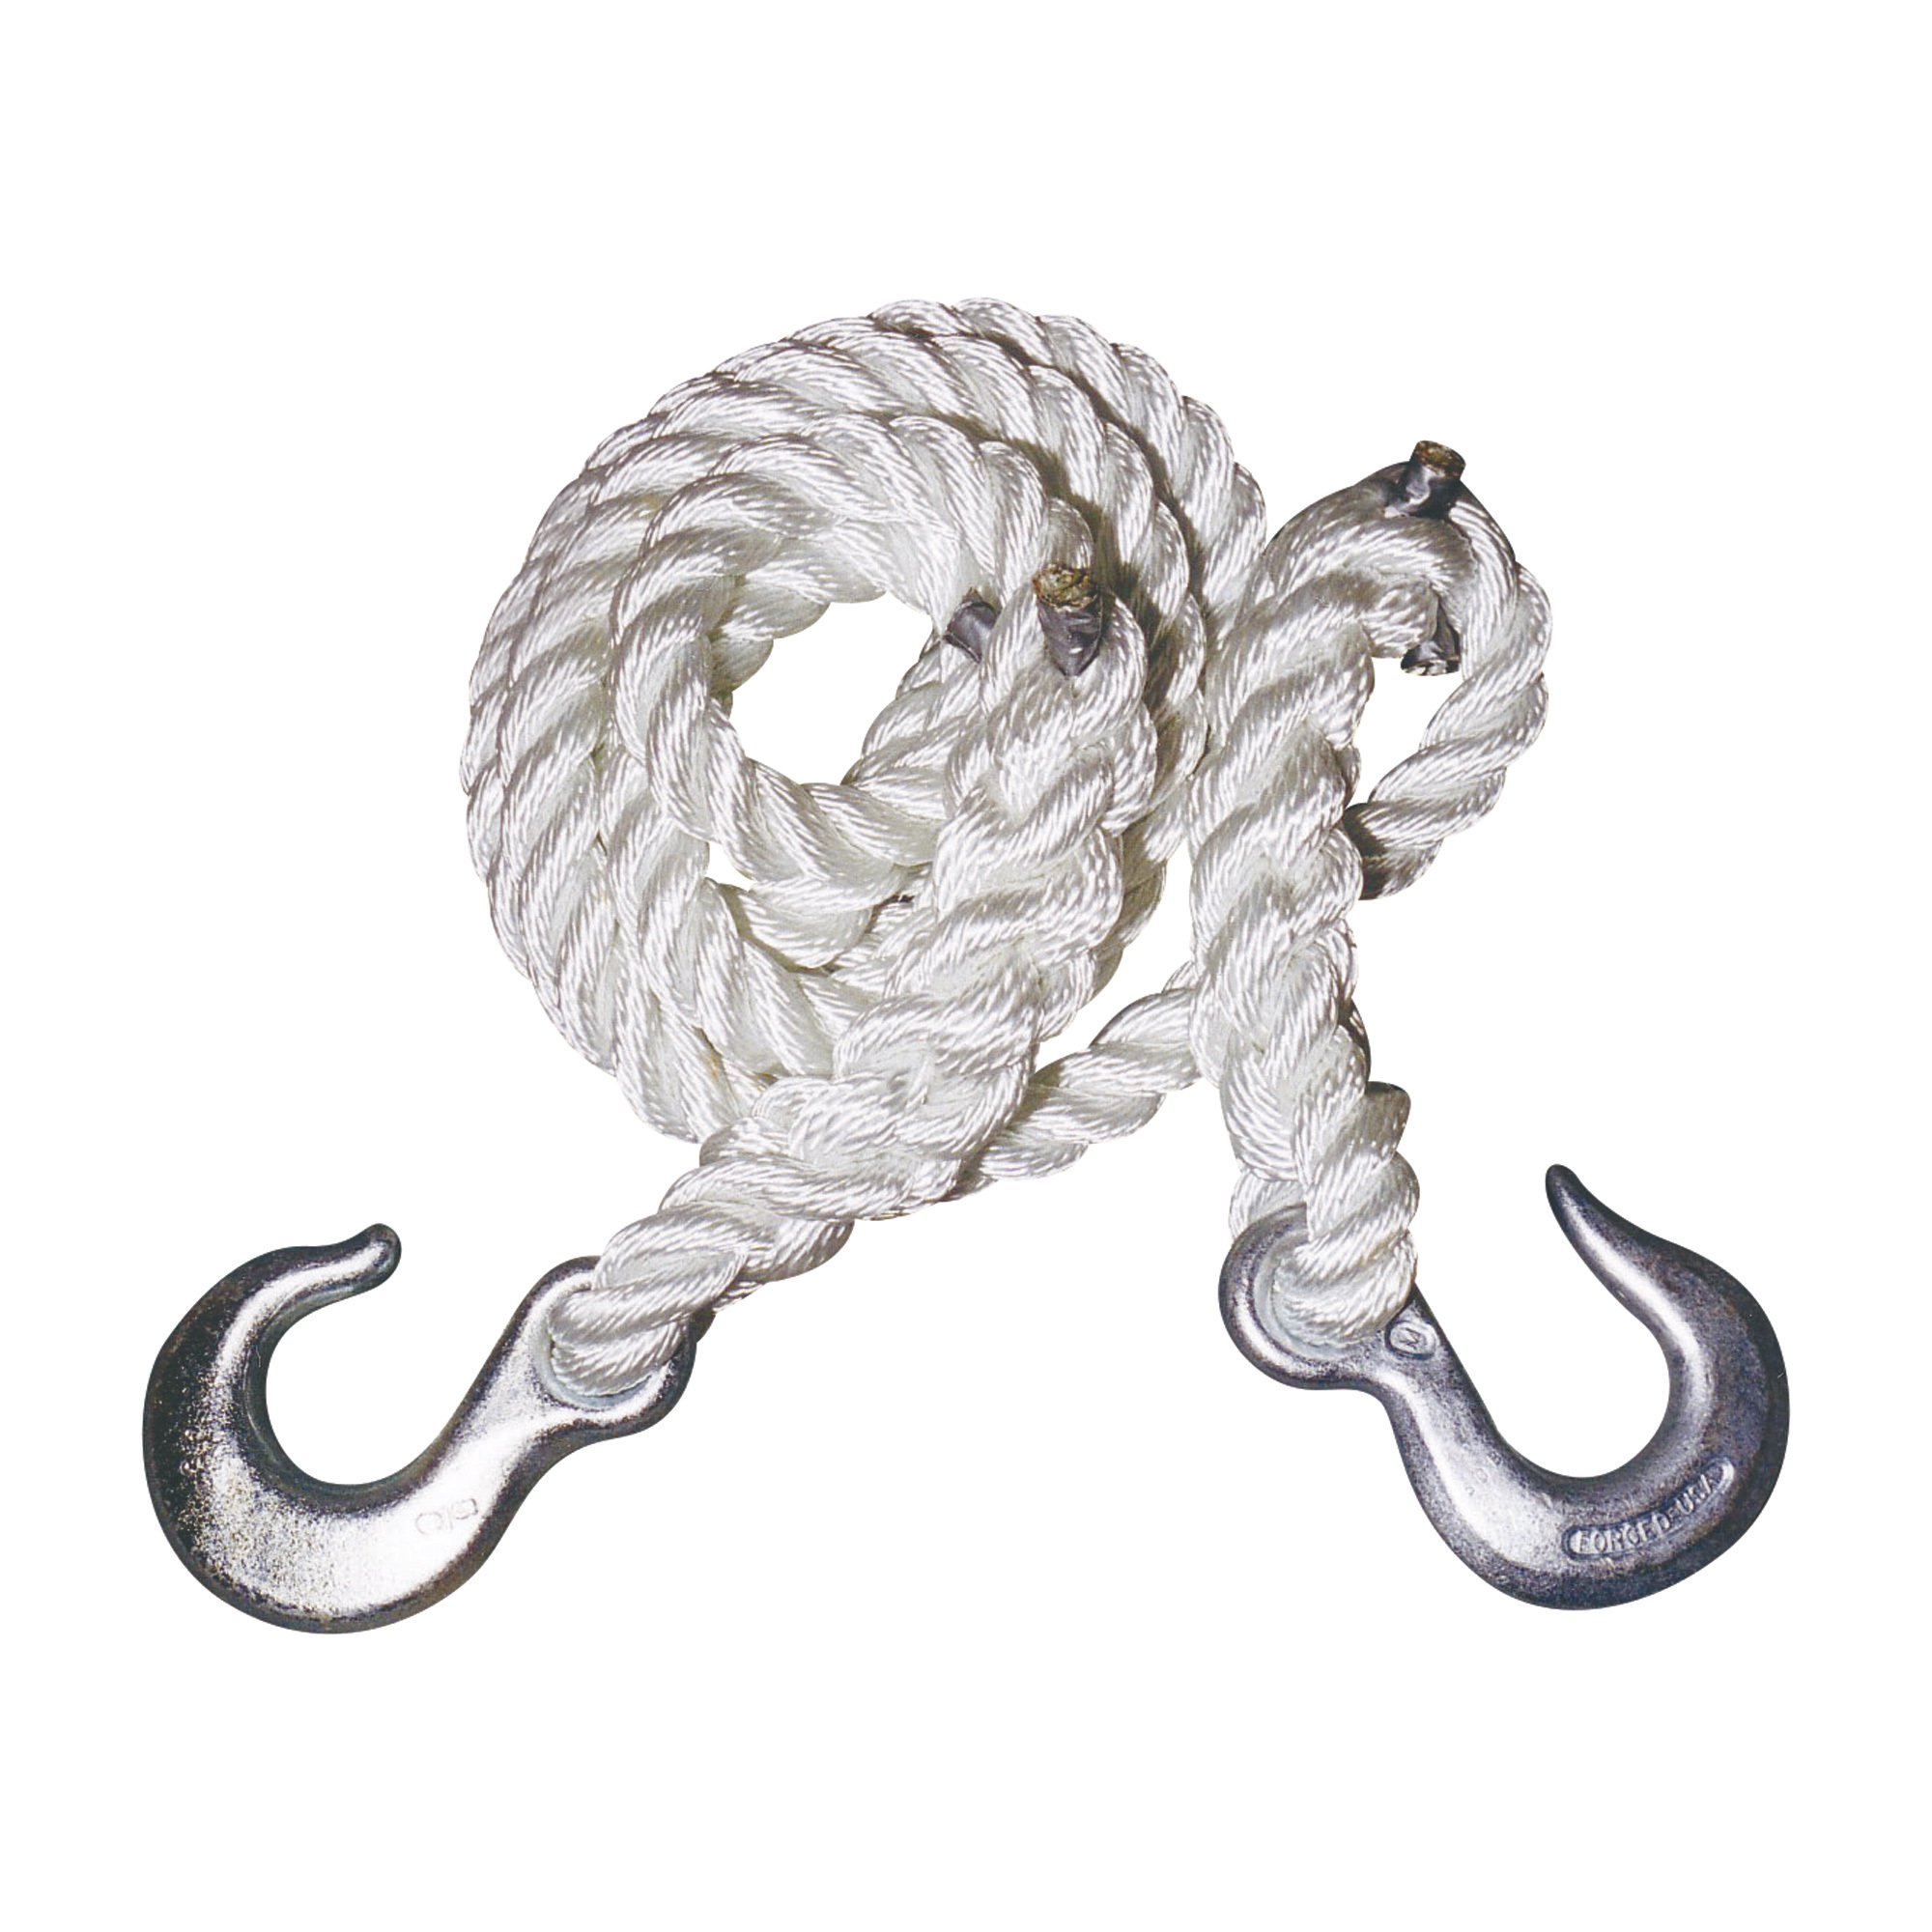  Nylon Rope With Side Hooks